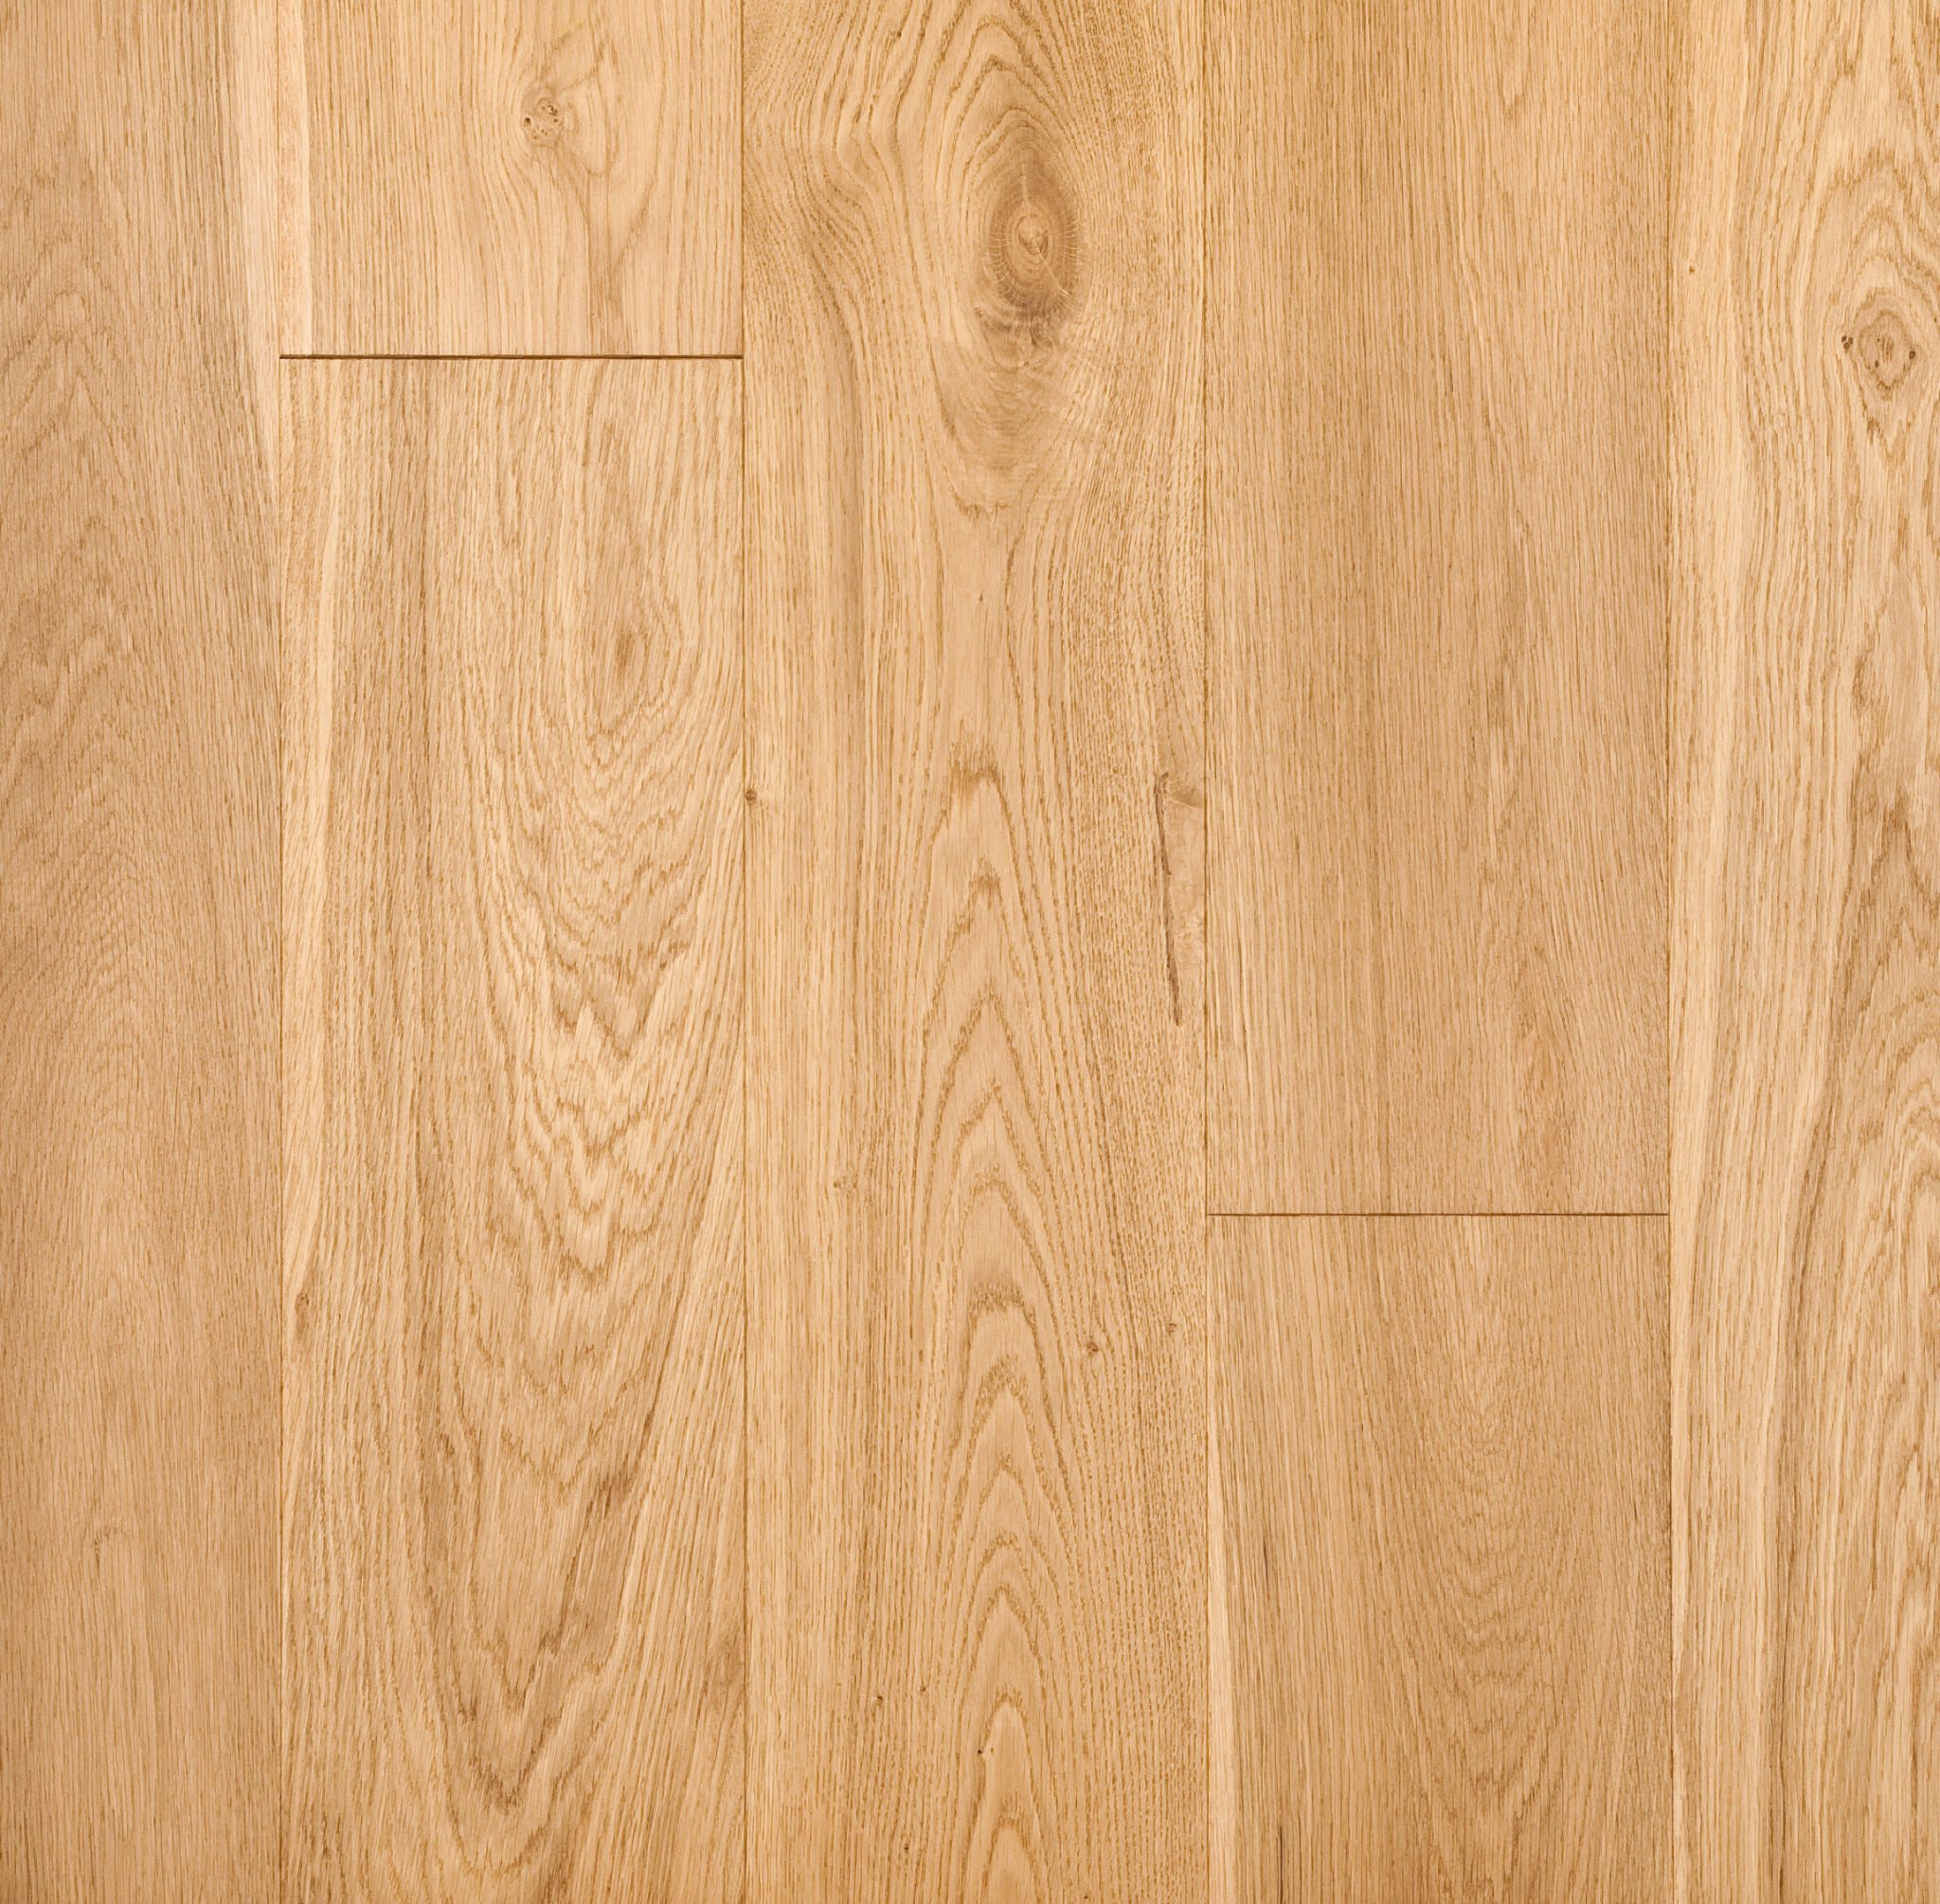 Multiply oak wood flooring named Deco Plank White Smoked Oak